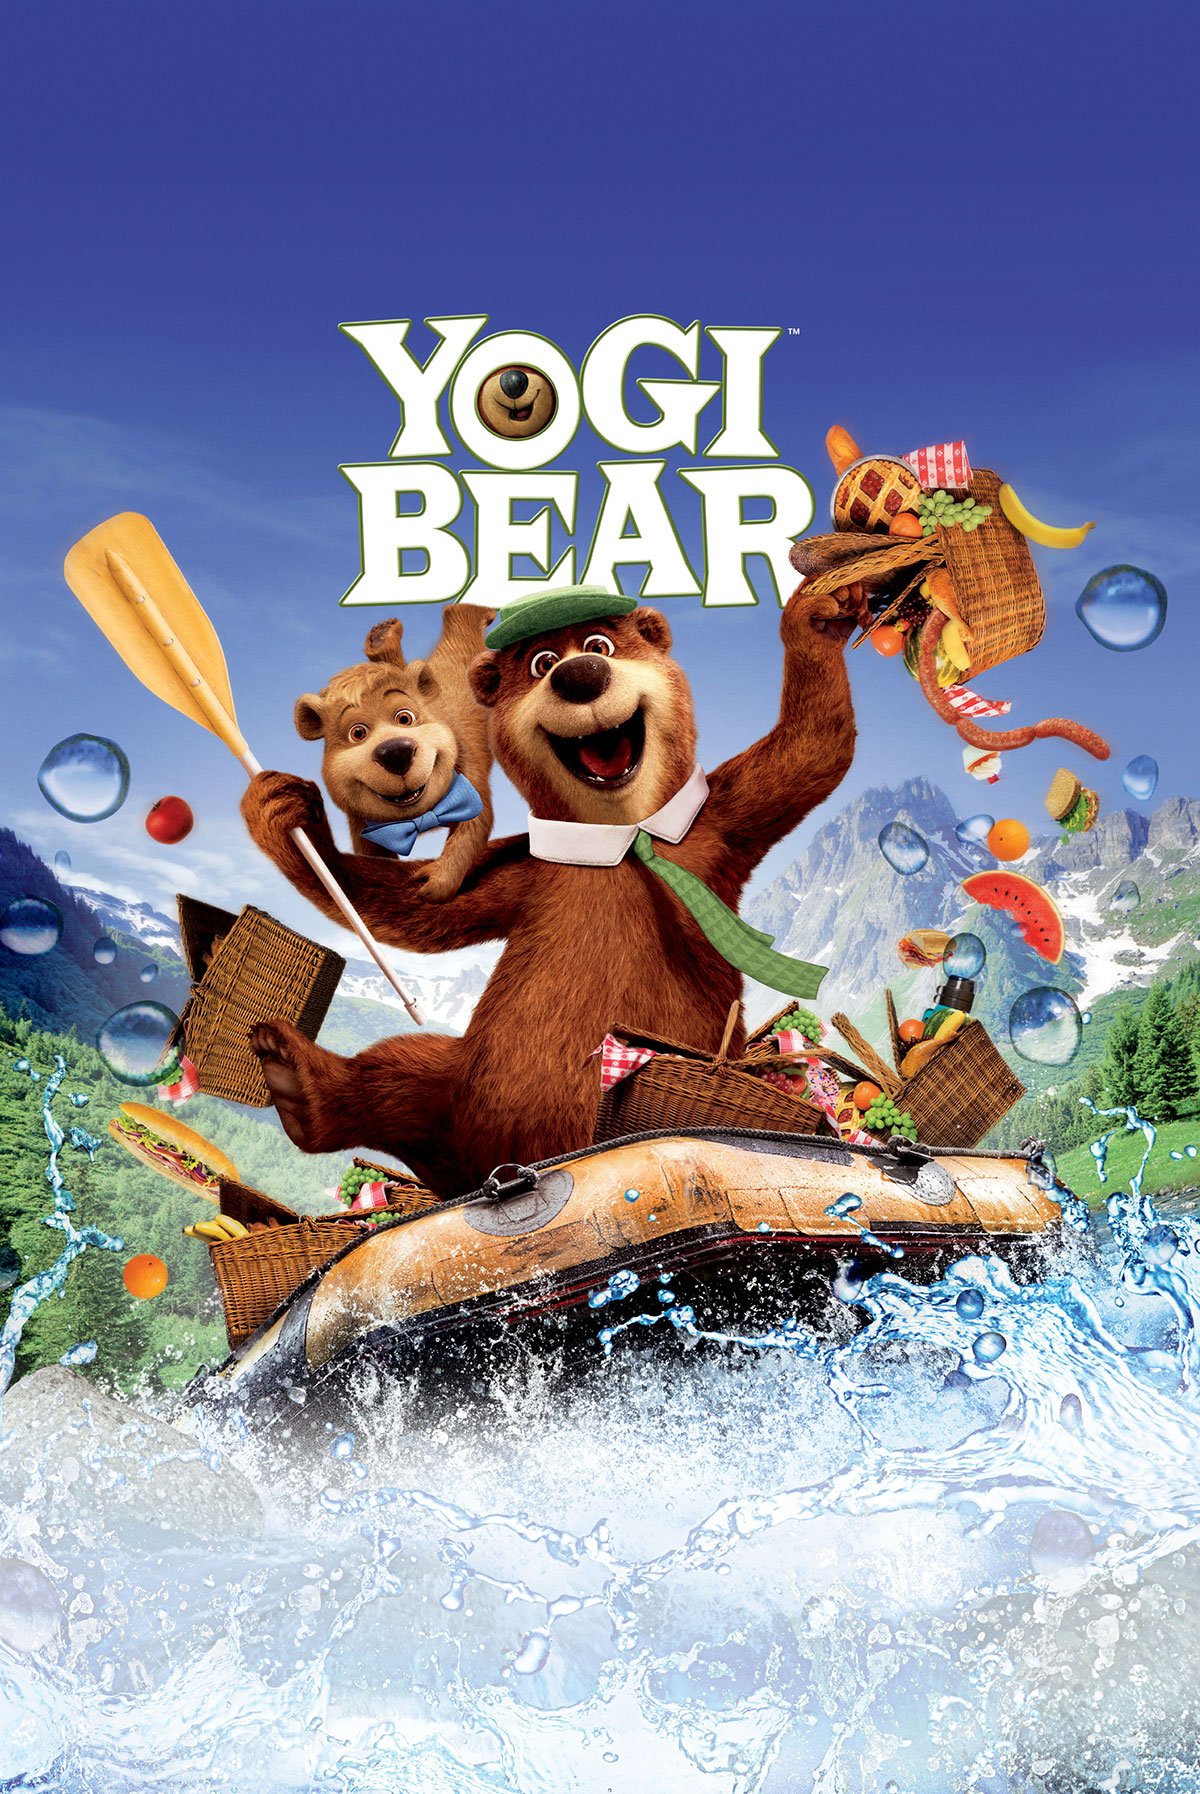 Now Player Yogi Bear